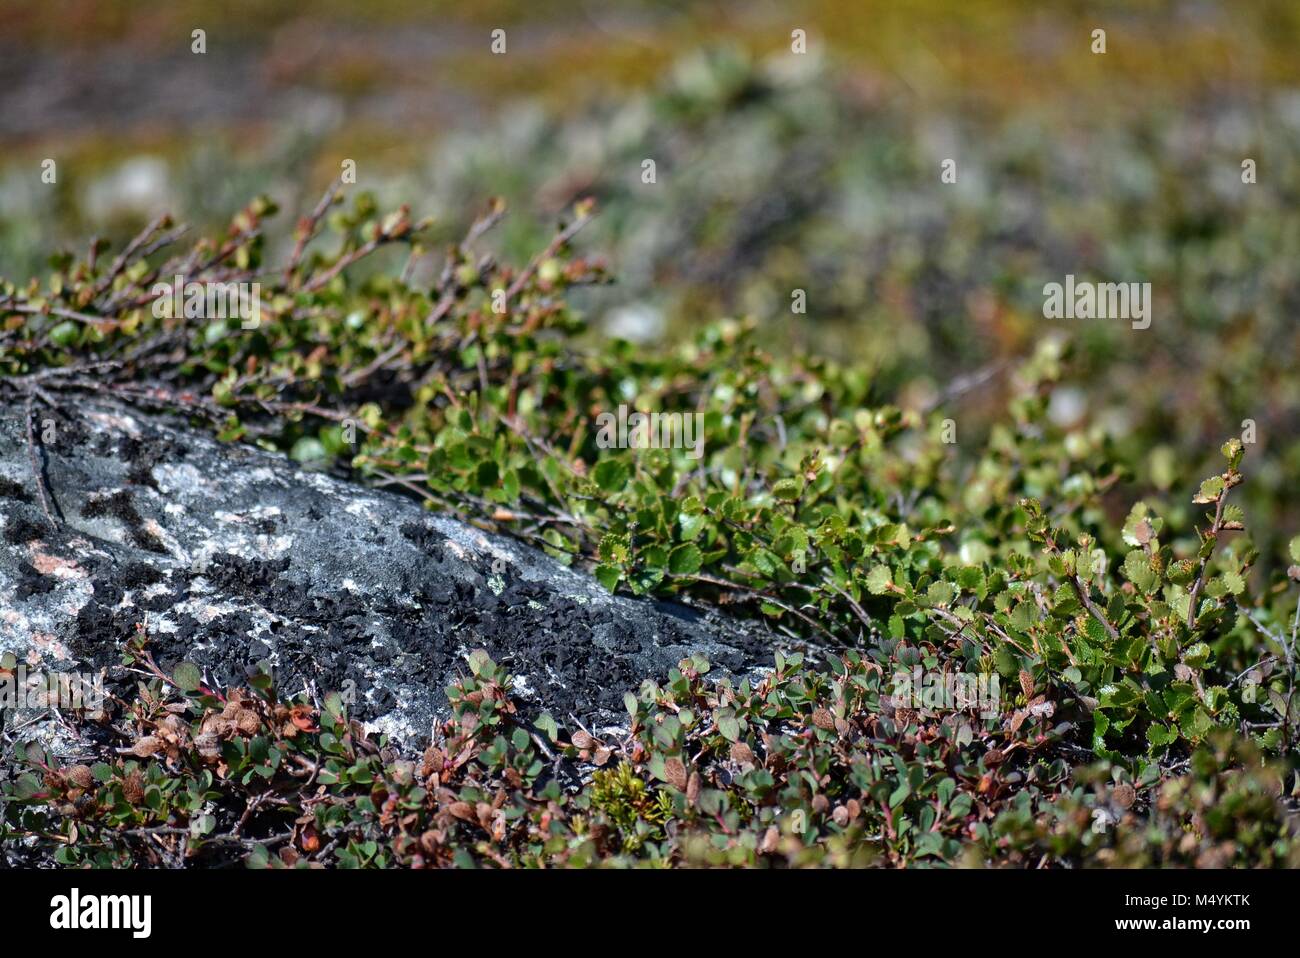 fauna in Greenland Ilulissat Denmark - plants growing on rocks Stock Photo